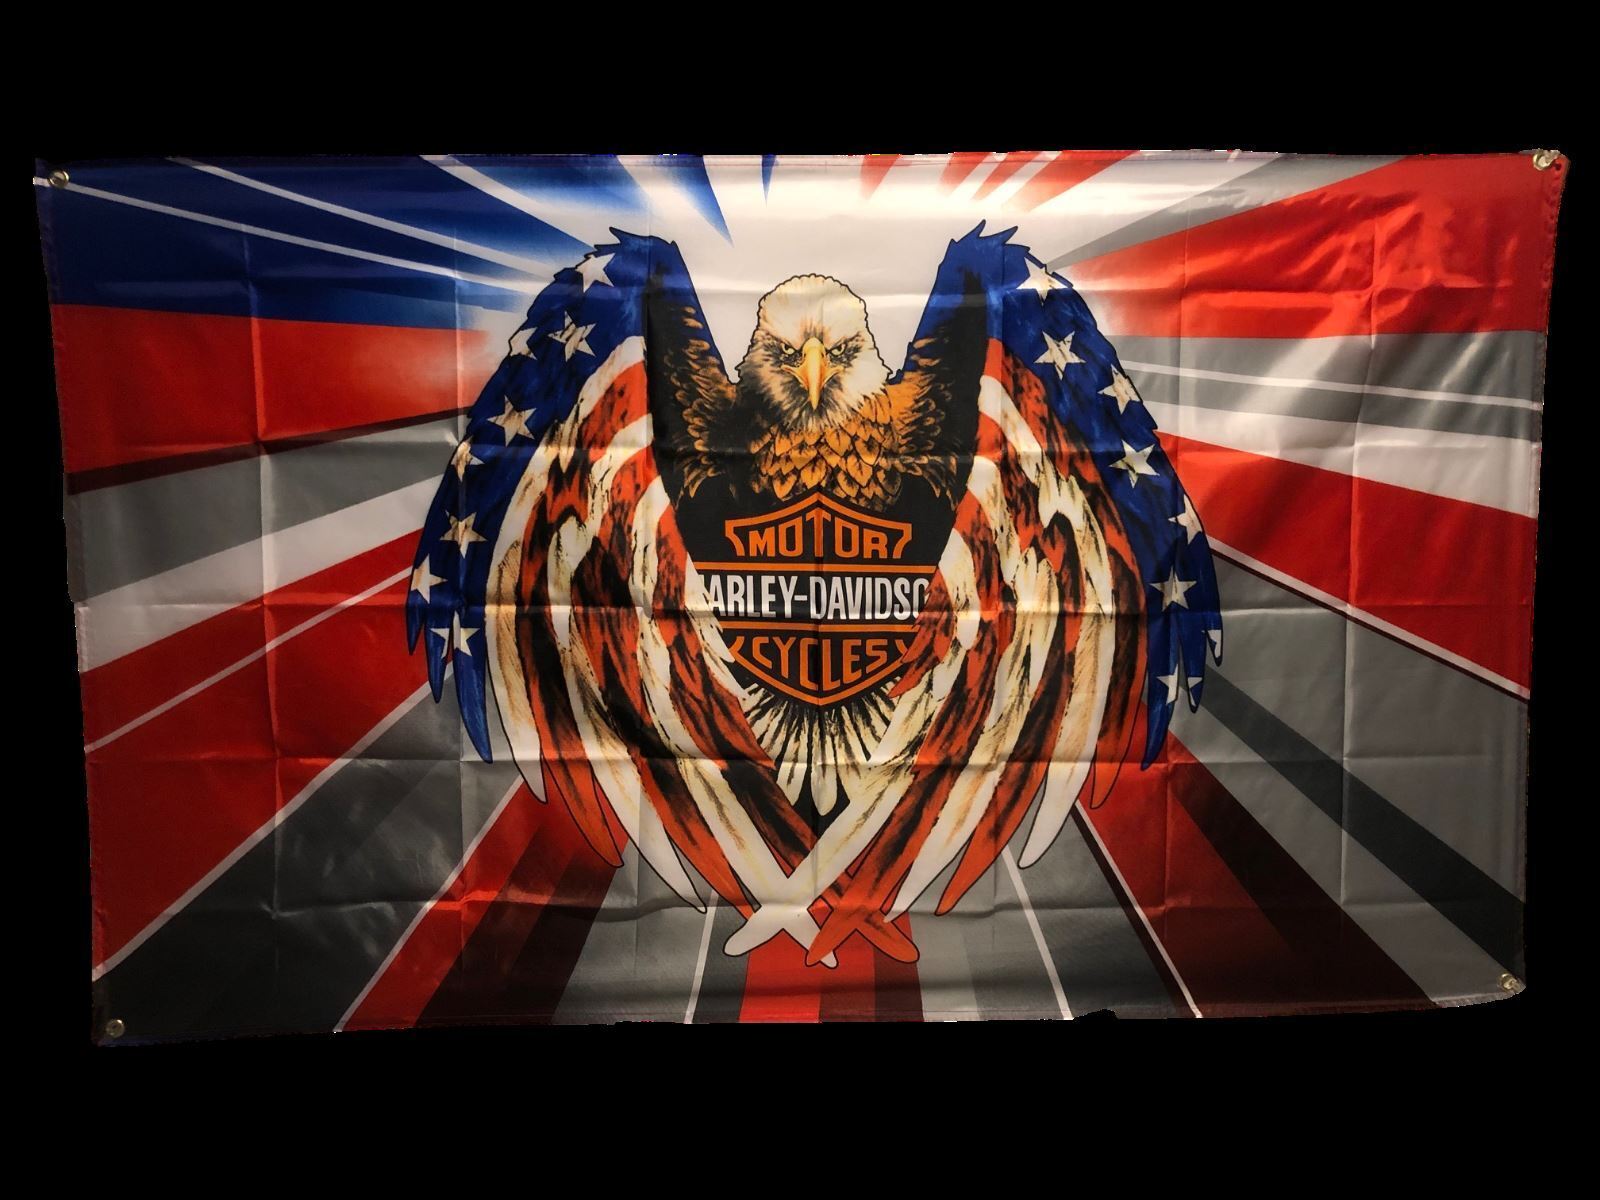 Harley Davidson 3x5 Flag Banner 3 X 5 Large Fast Free USA Shipping New.